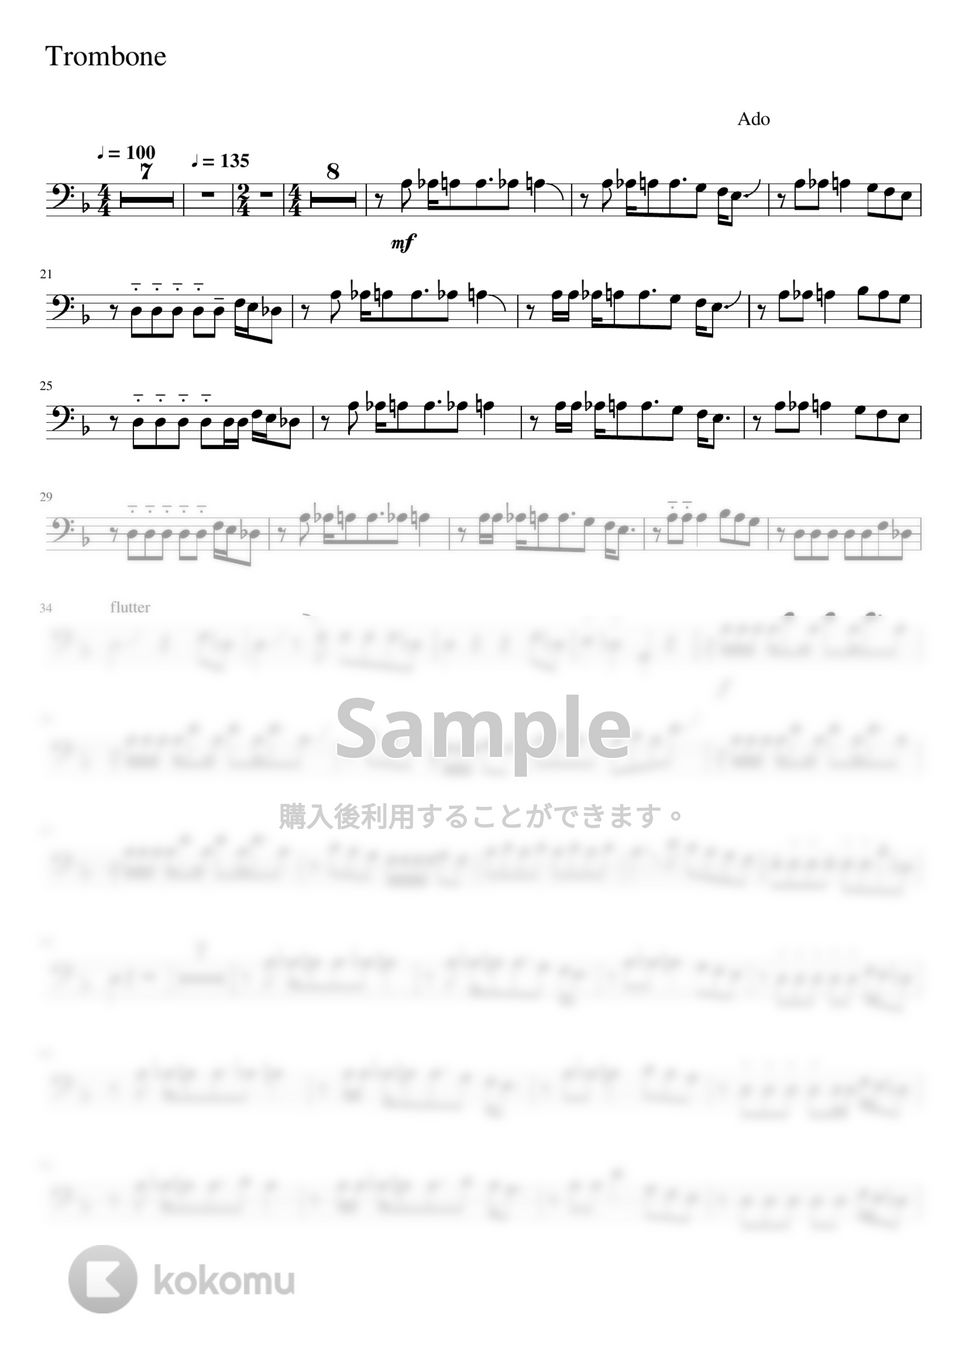 Ado - ラブカ？ (-Trombone Solo- 原キー) by Creampuff